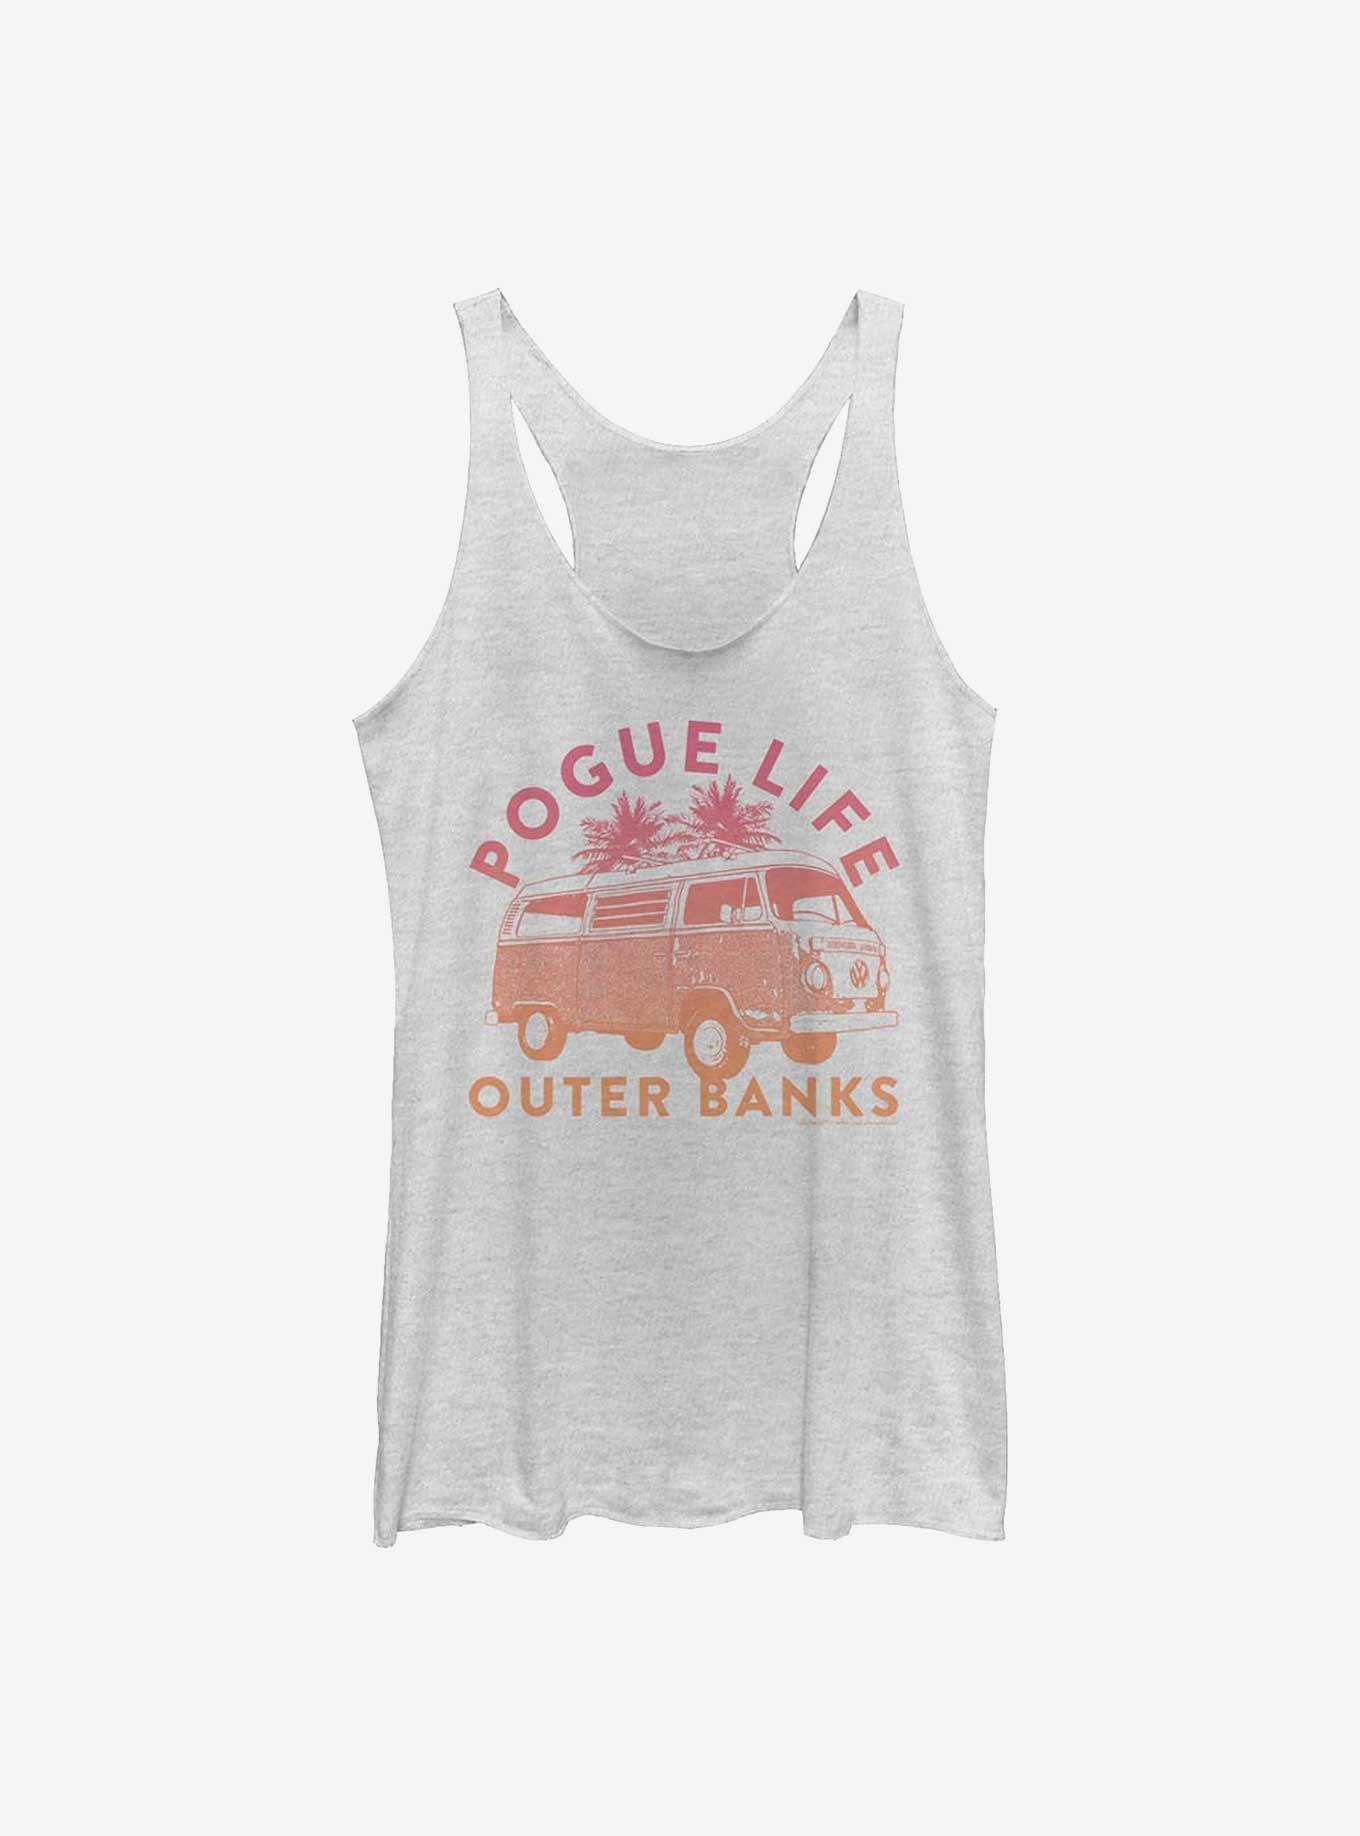 Outer Banks Pogue Life Girls Tank, WHITE HTR, hi-res